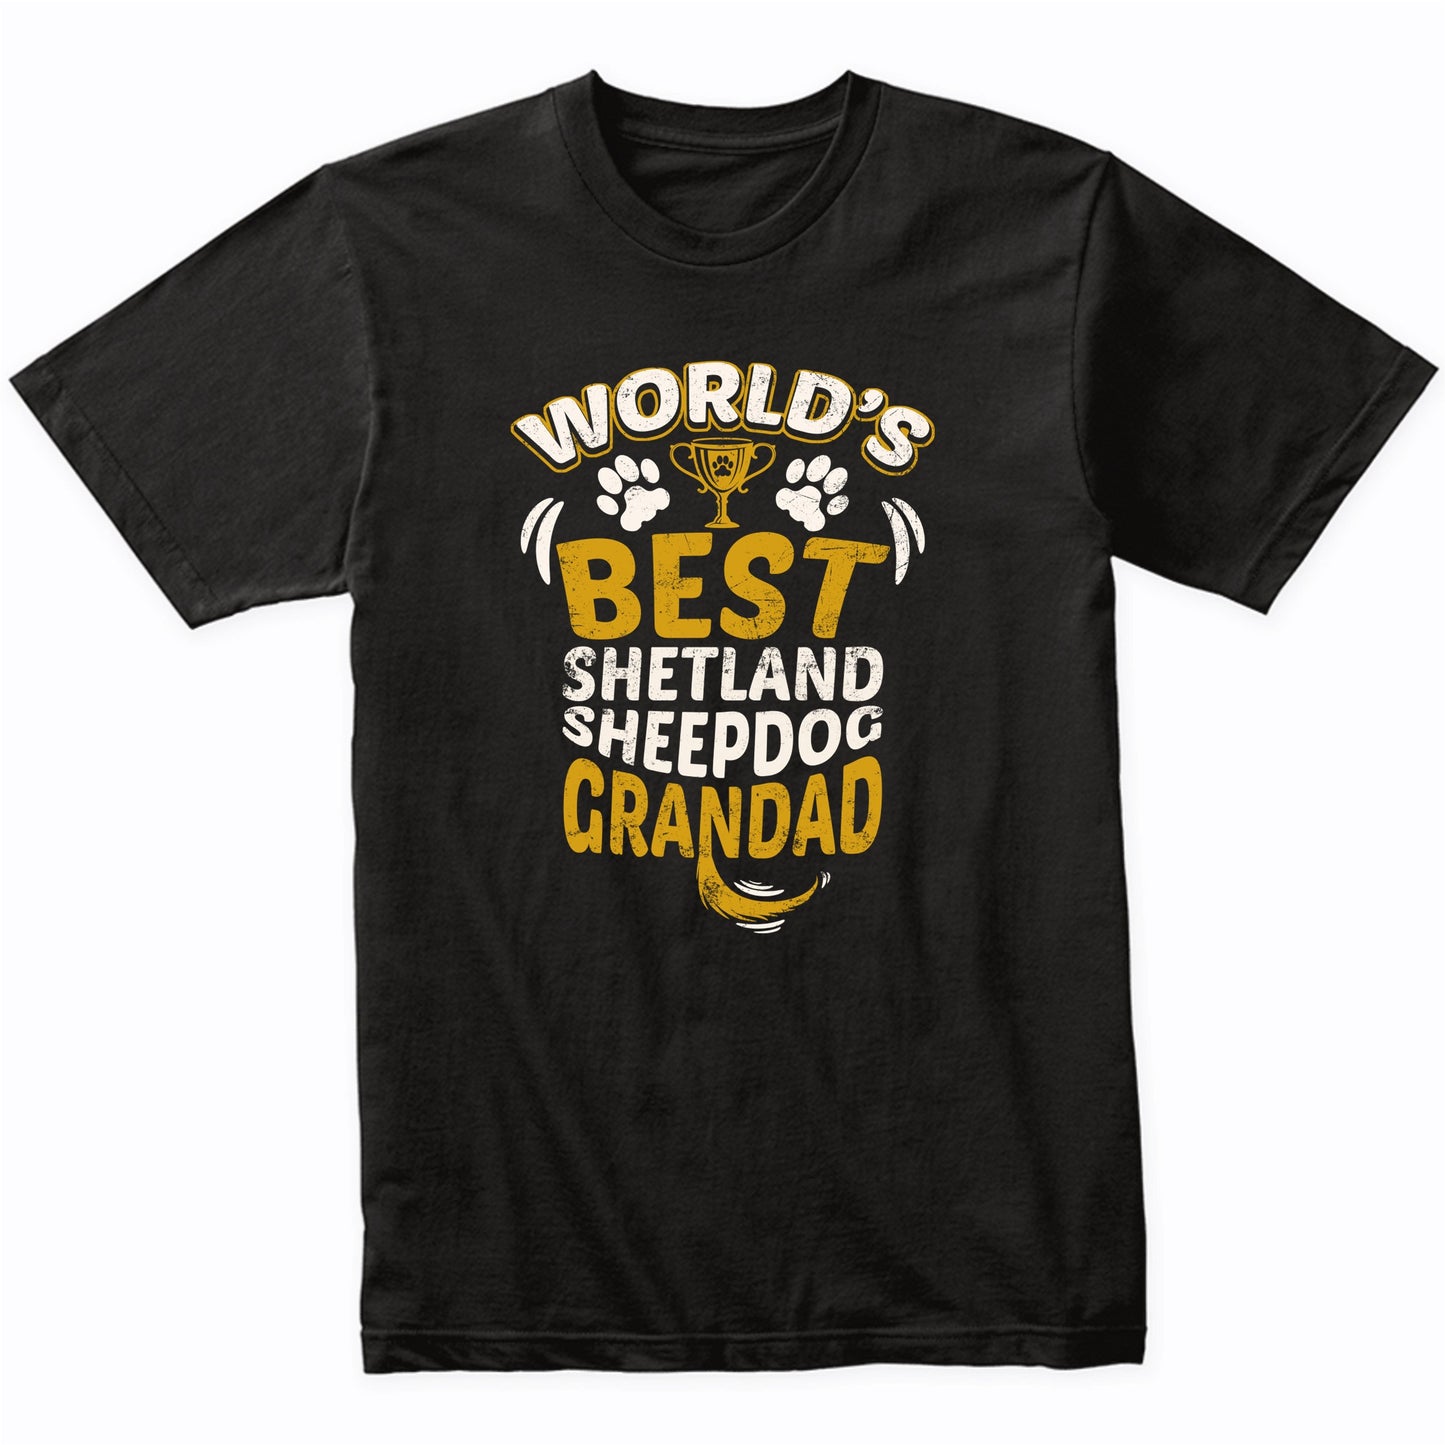 World's Best Shetland Sheepdog Grandad Graphic T-Shirt